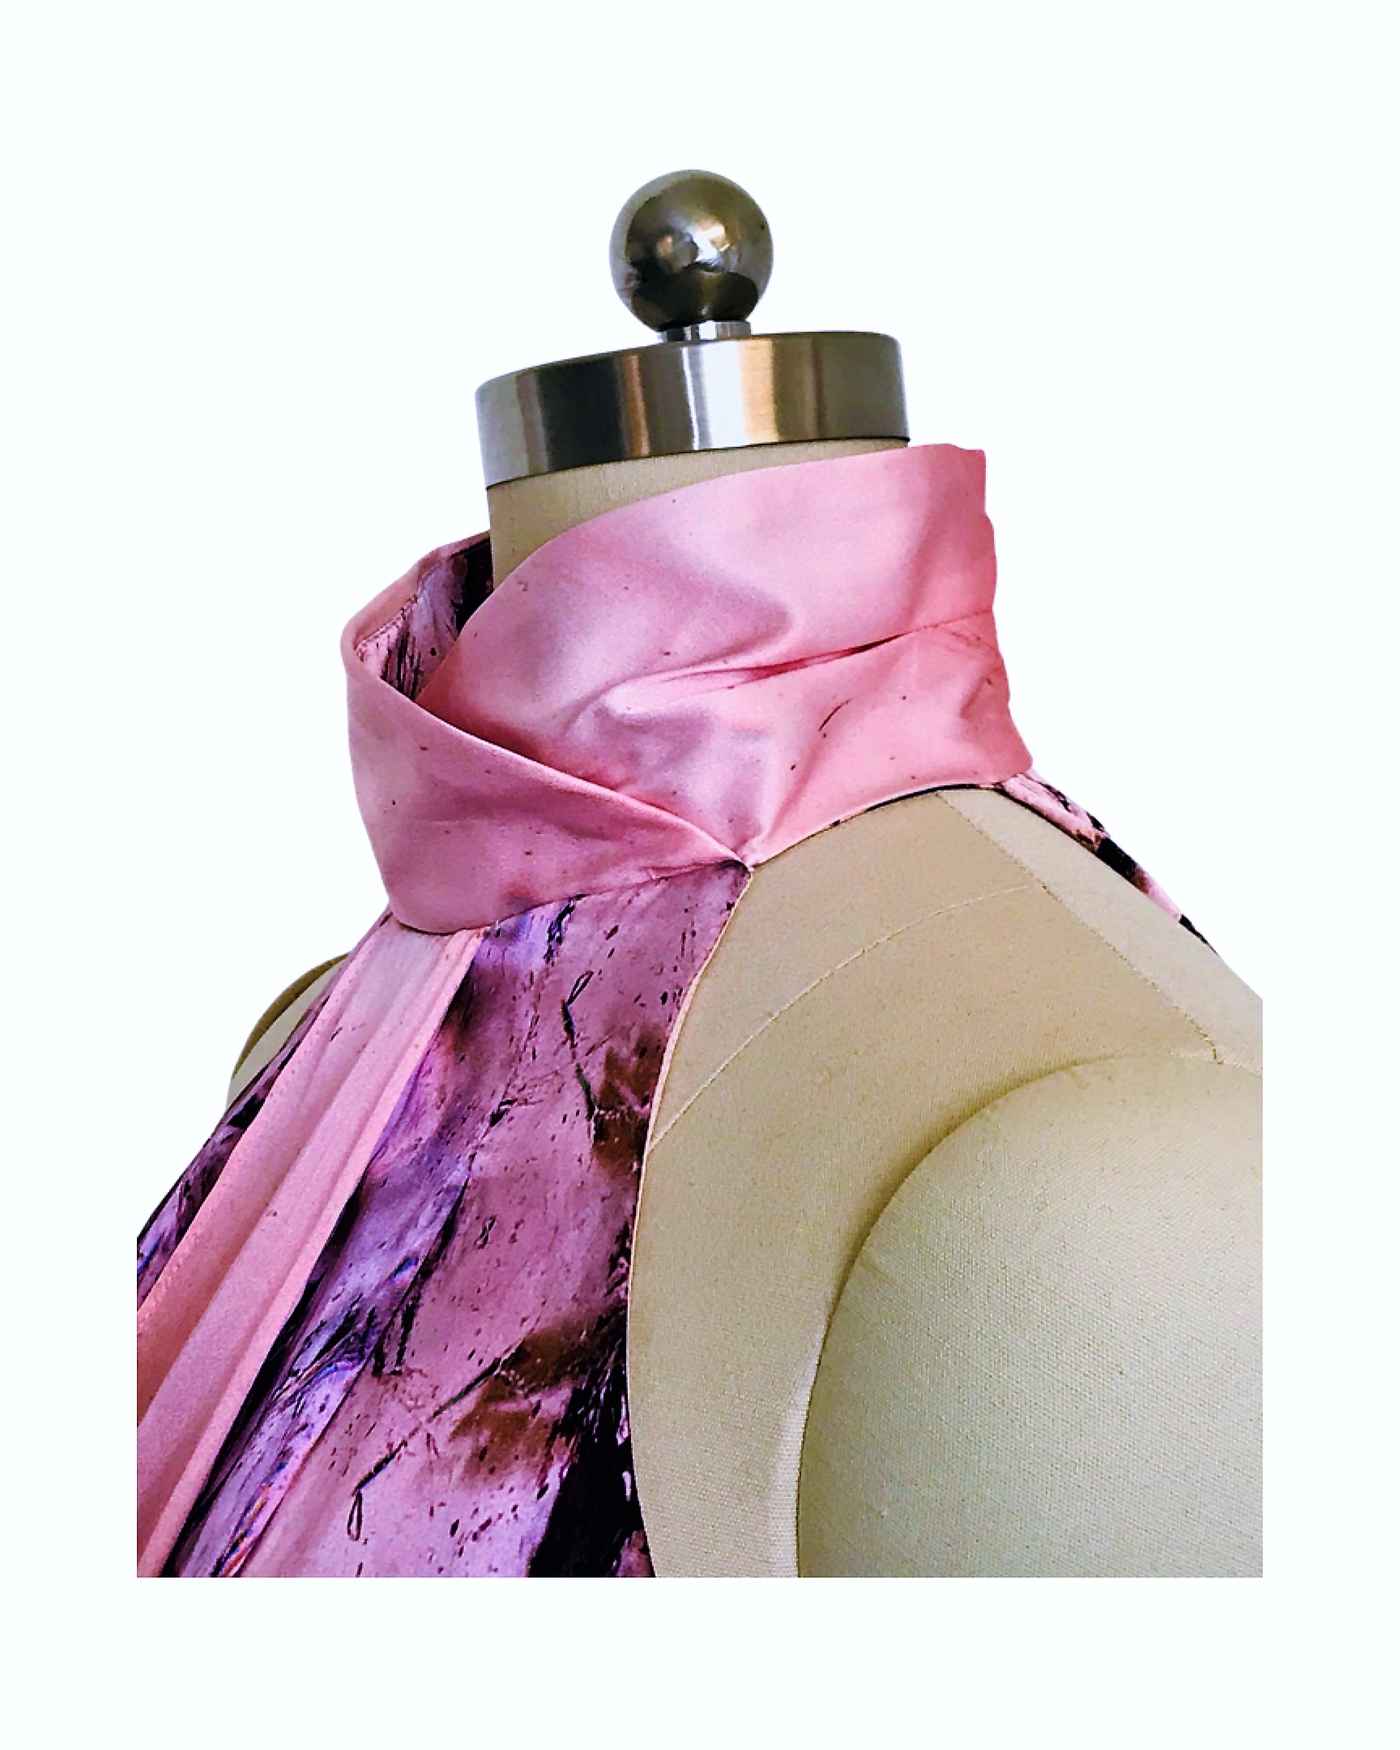 Pink Amythyst Print High neck Dress - (50%OFF)